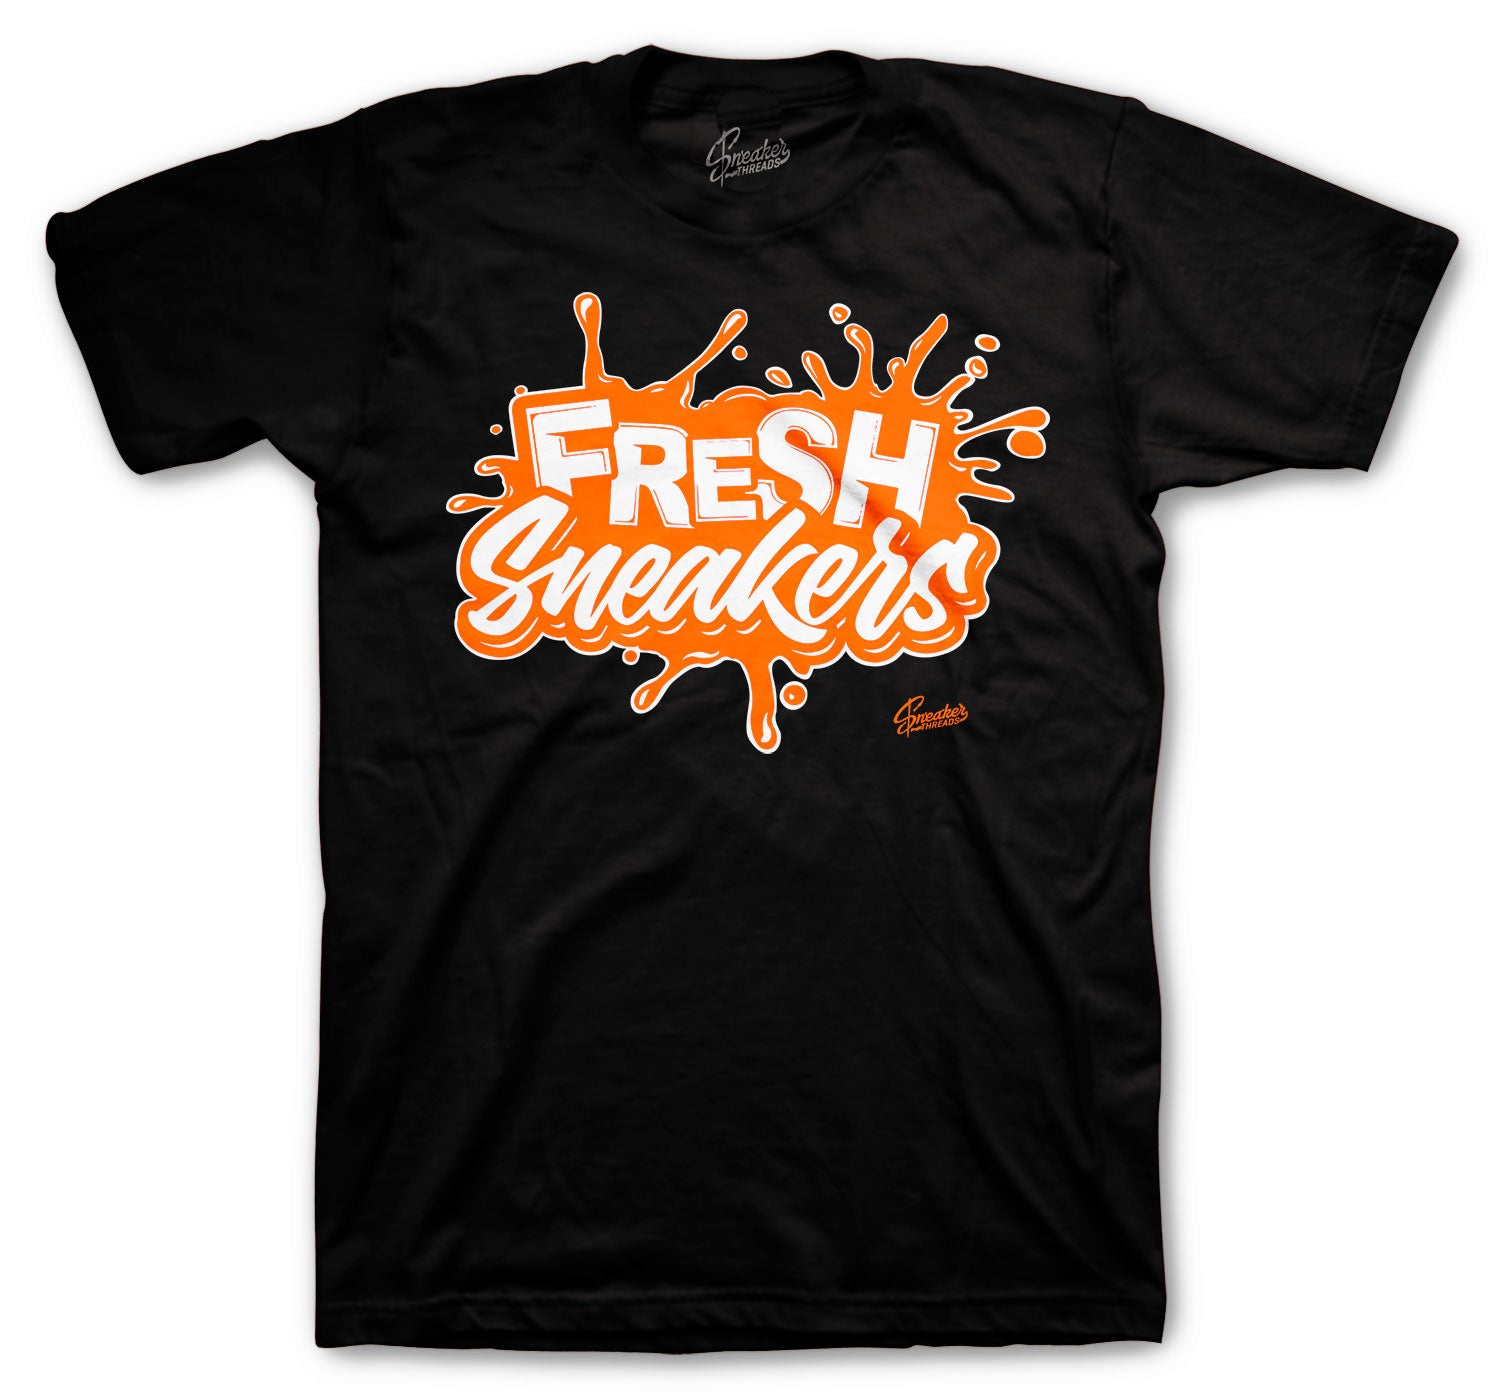 Retro 1 Electro Orange Shirt - Fresh Sneakers - Black